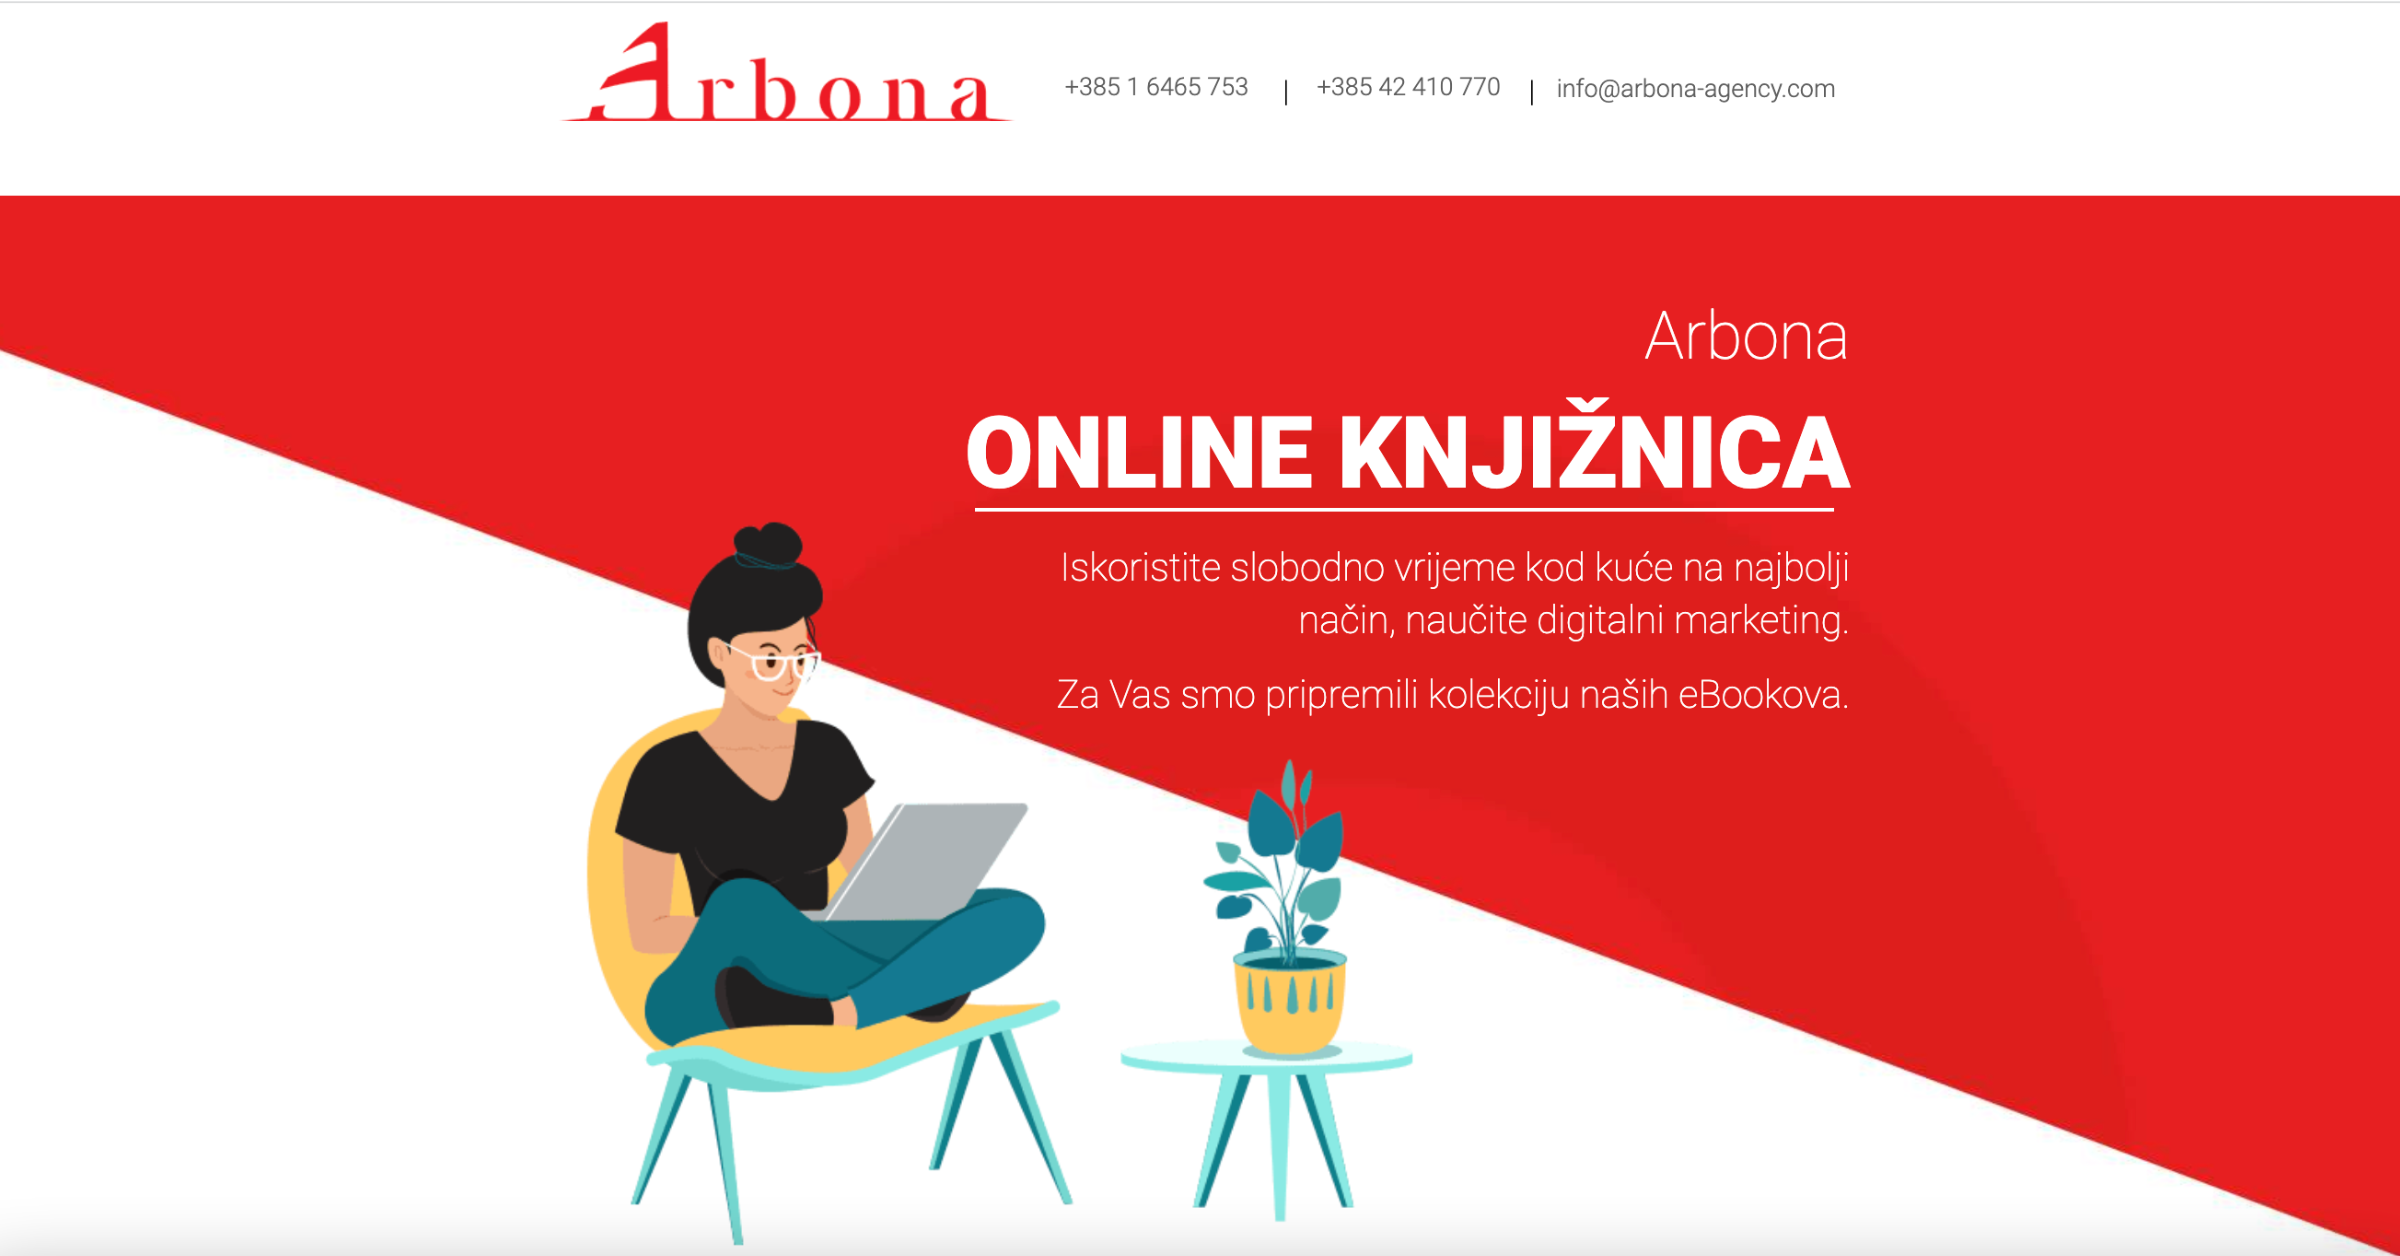 Arbona online knjižnica